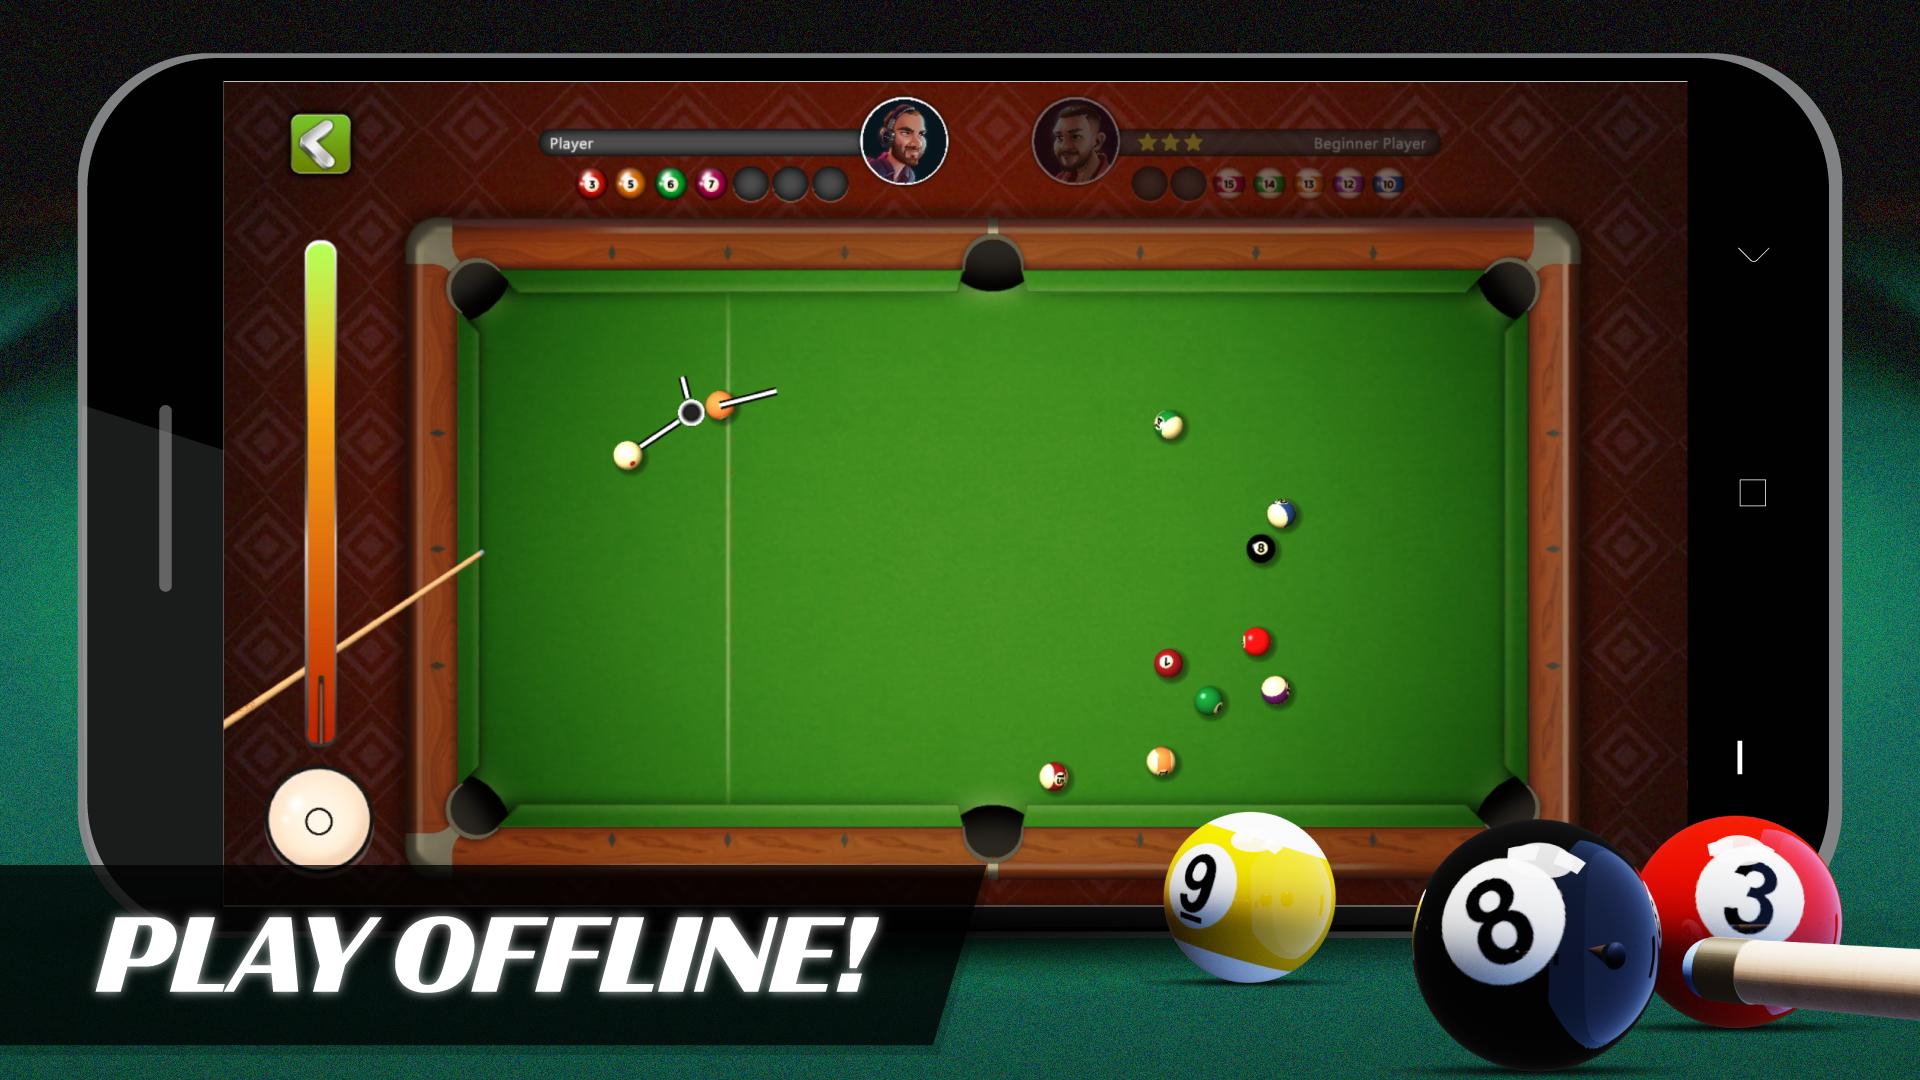 8 Ball Billiards- Offline Free Pool Game 1.51 Screenshot 9